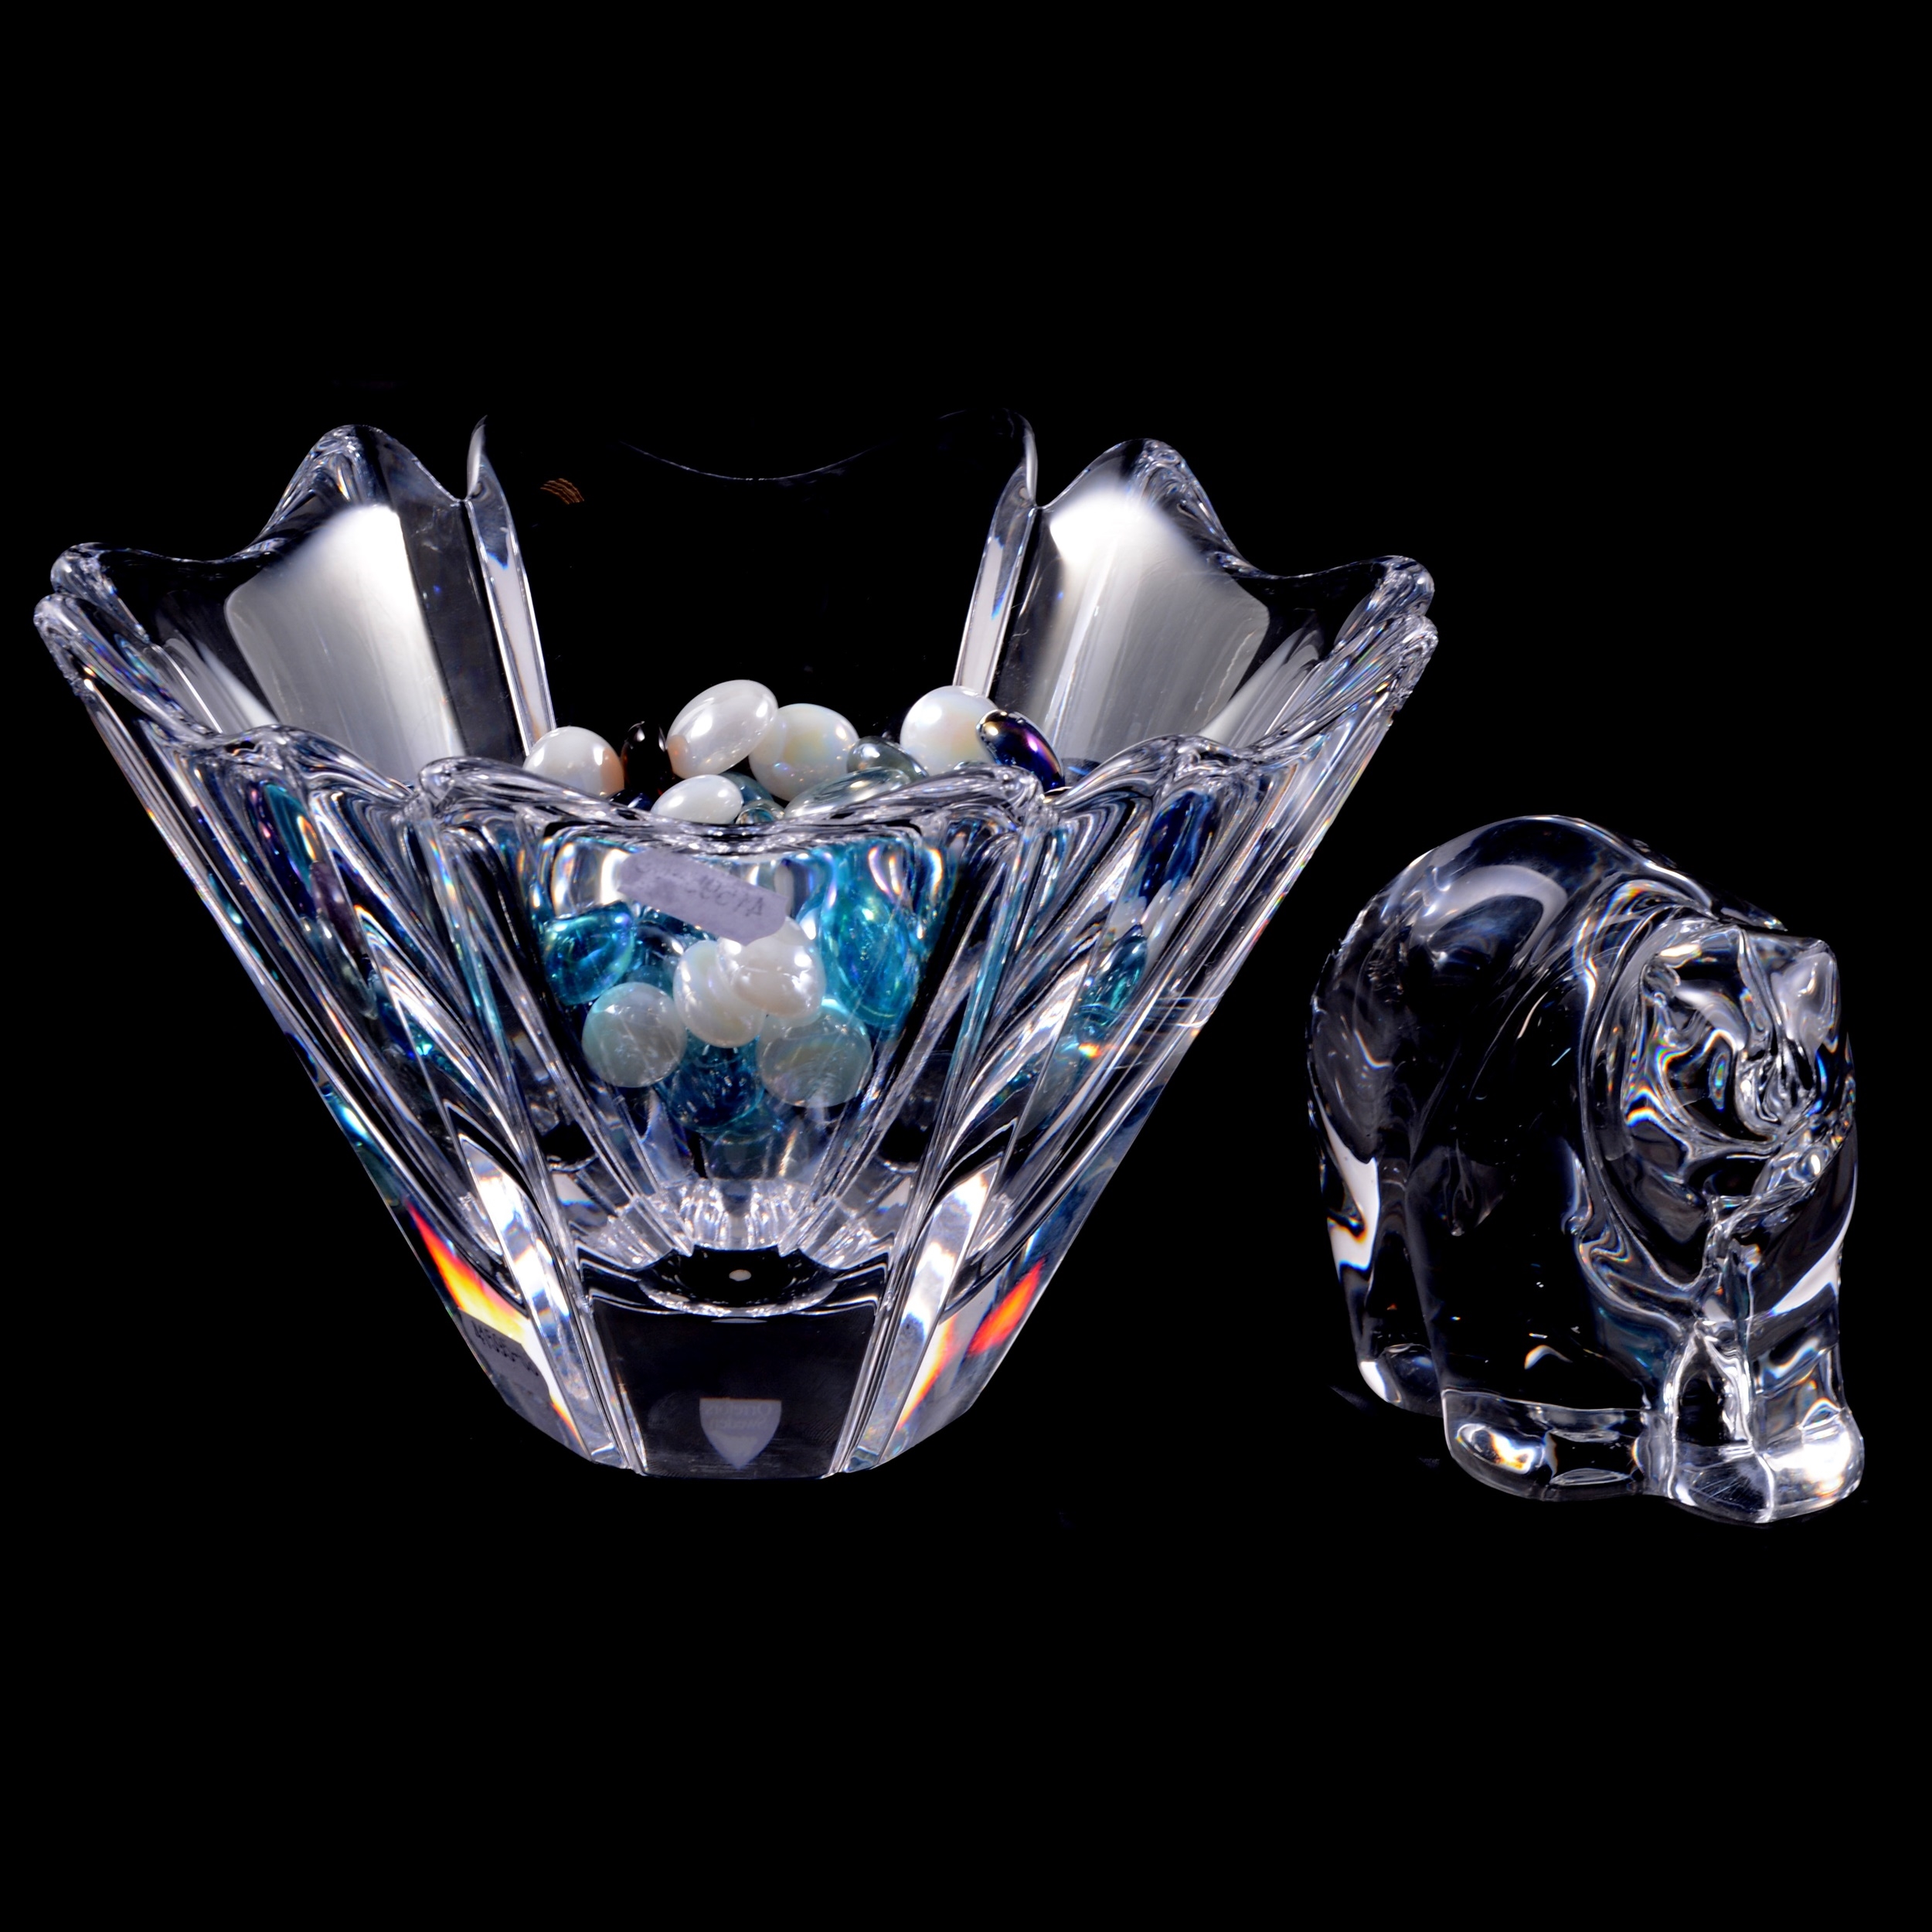 An Orrefors glass bowl and modern Crystal glass bear figure - Orrefors